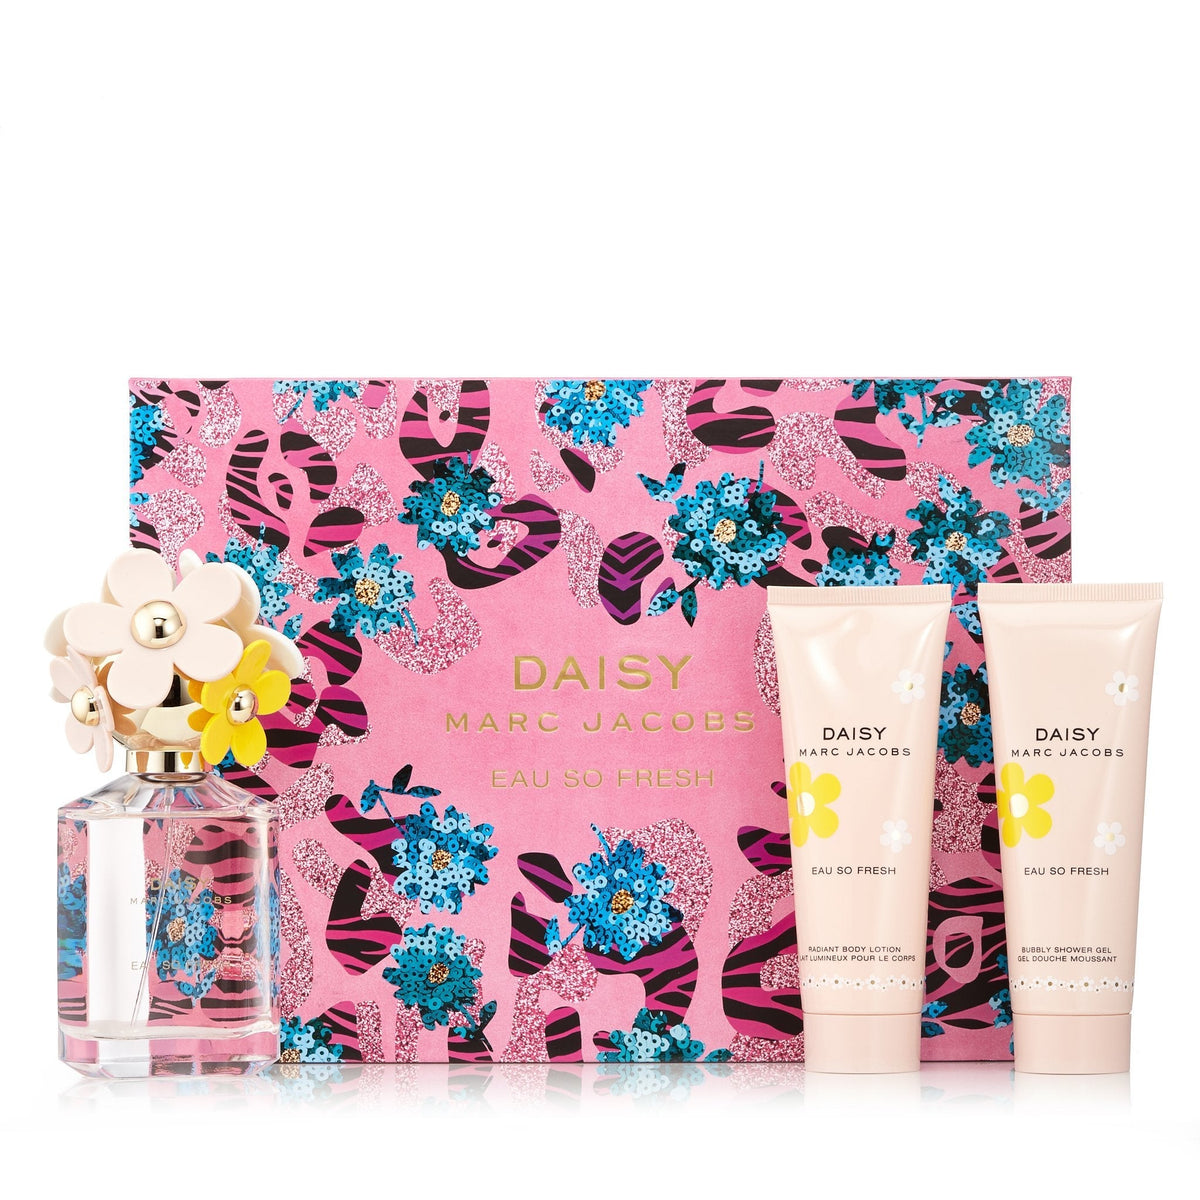 Daisy Eau So Fresh Gift Set for Women by Marc Jacobs 2.5 oz.